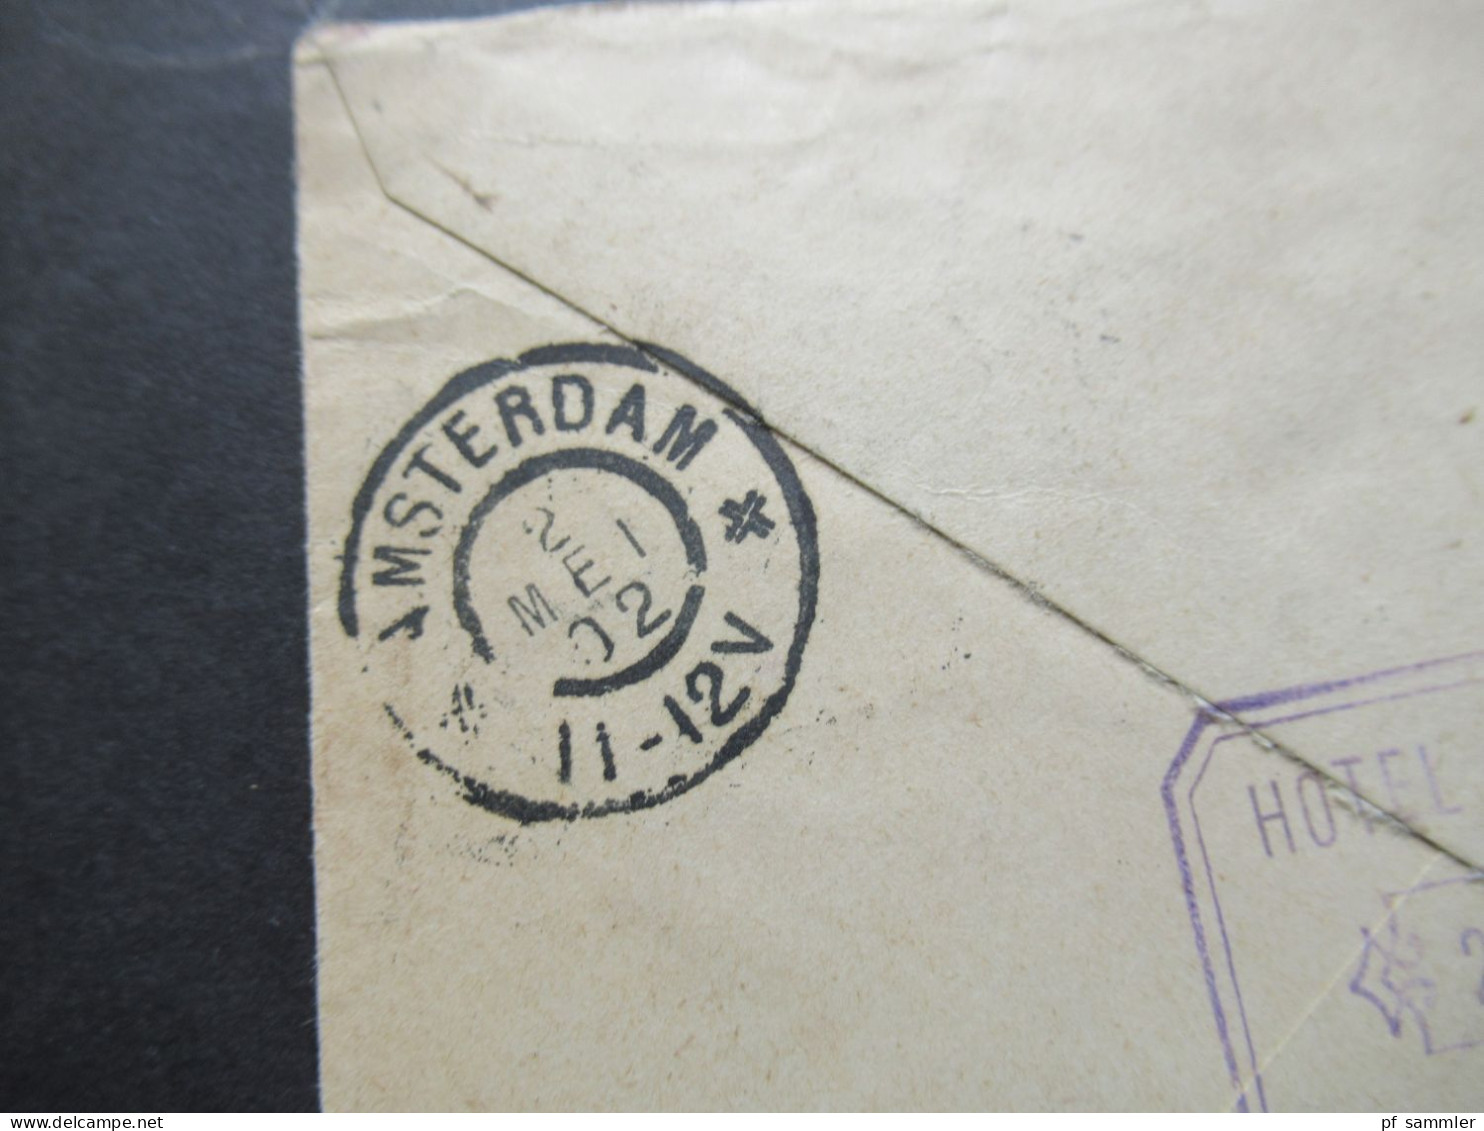 Niederlande 1902 GA Umschlag mit ZuF Amsterdam nach Algier (Algerien) / rücks. Stp. Hotel de la Regence Alger / retour